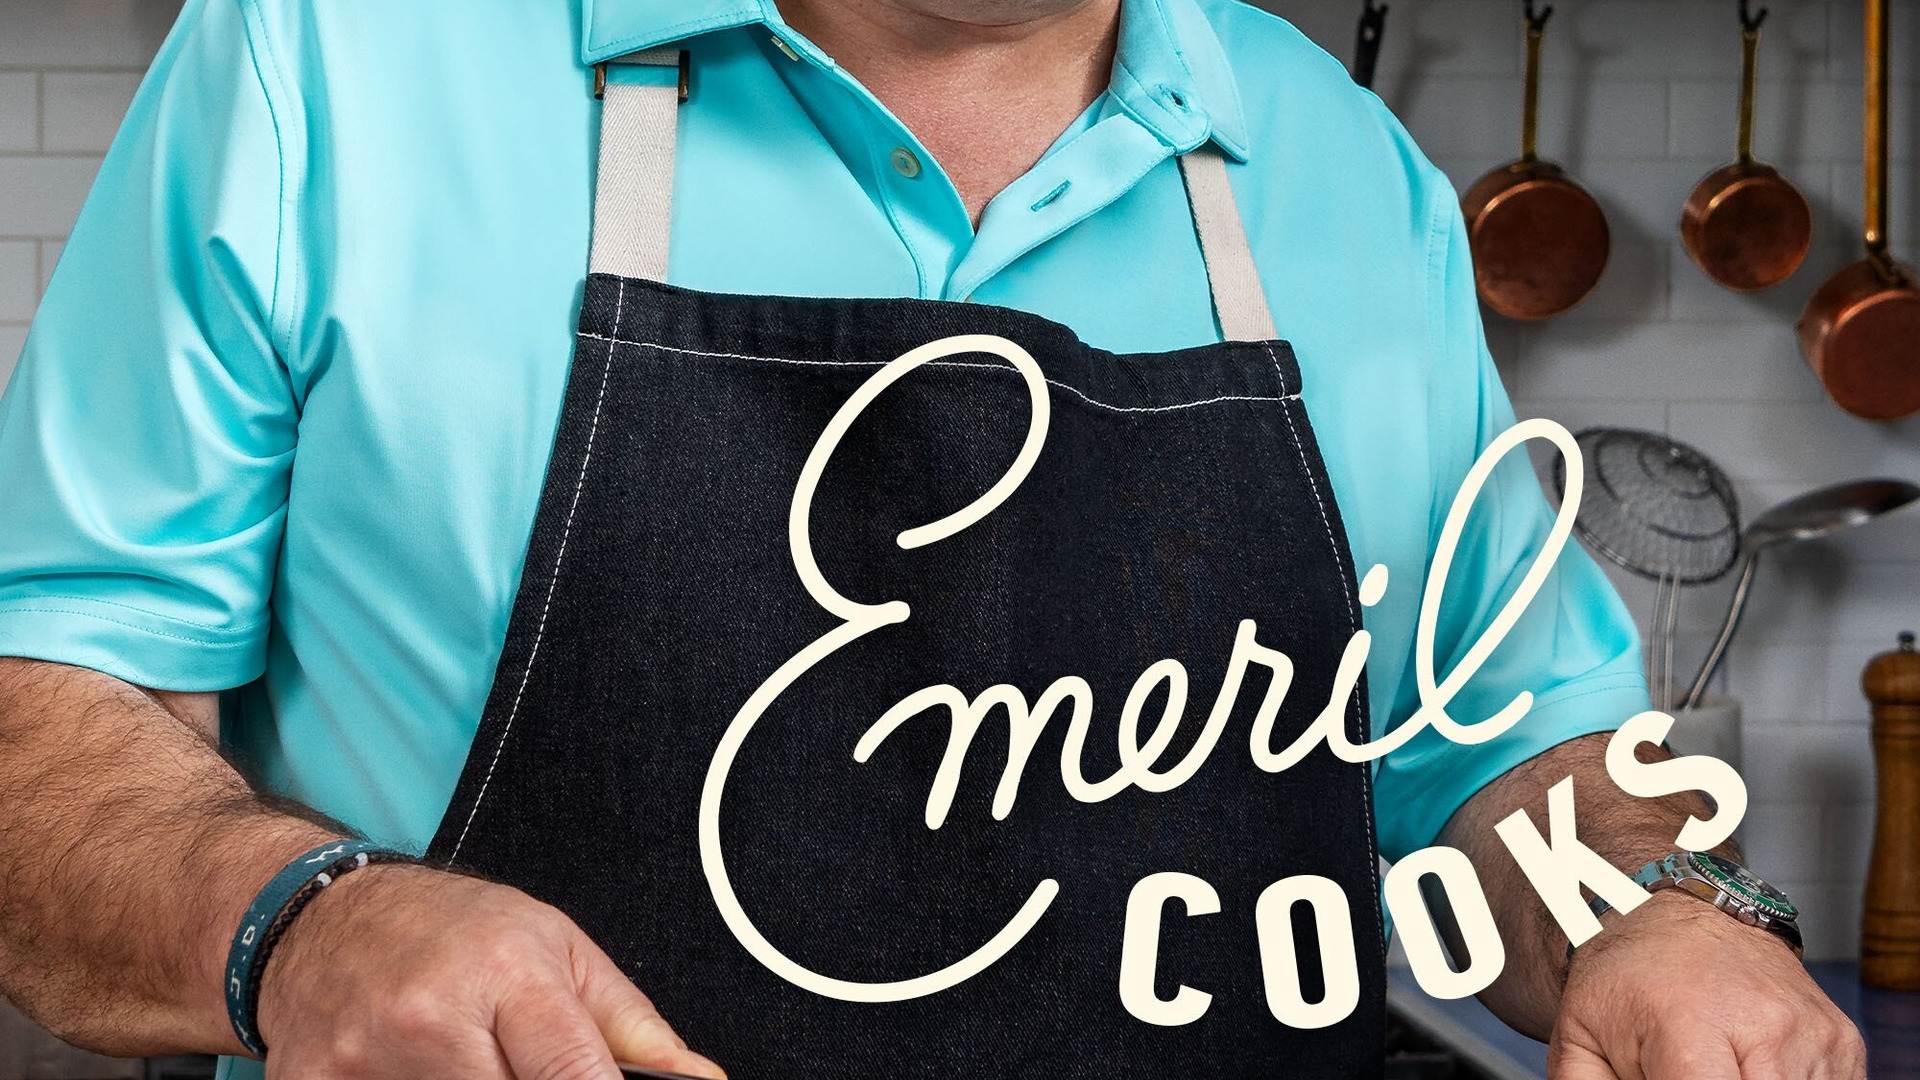 Show Emeril Cooks